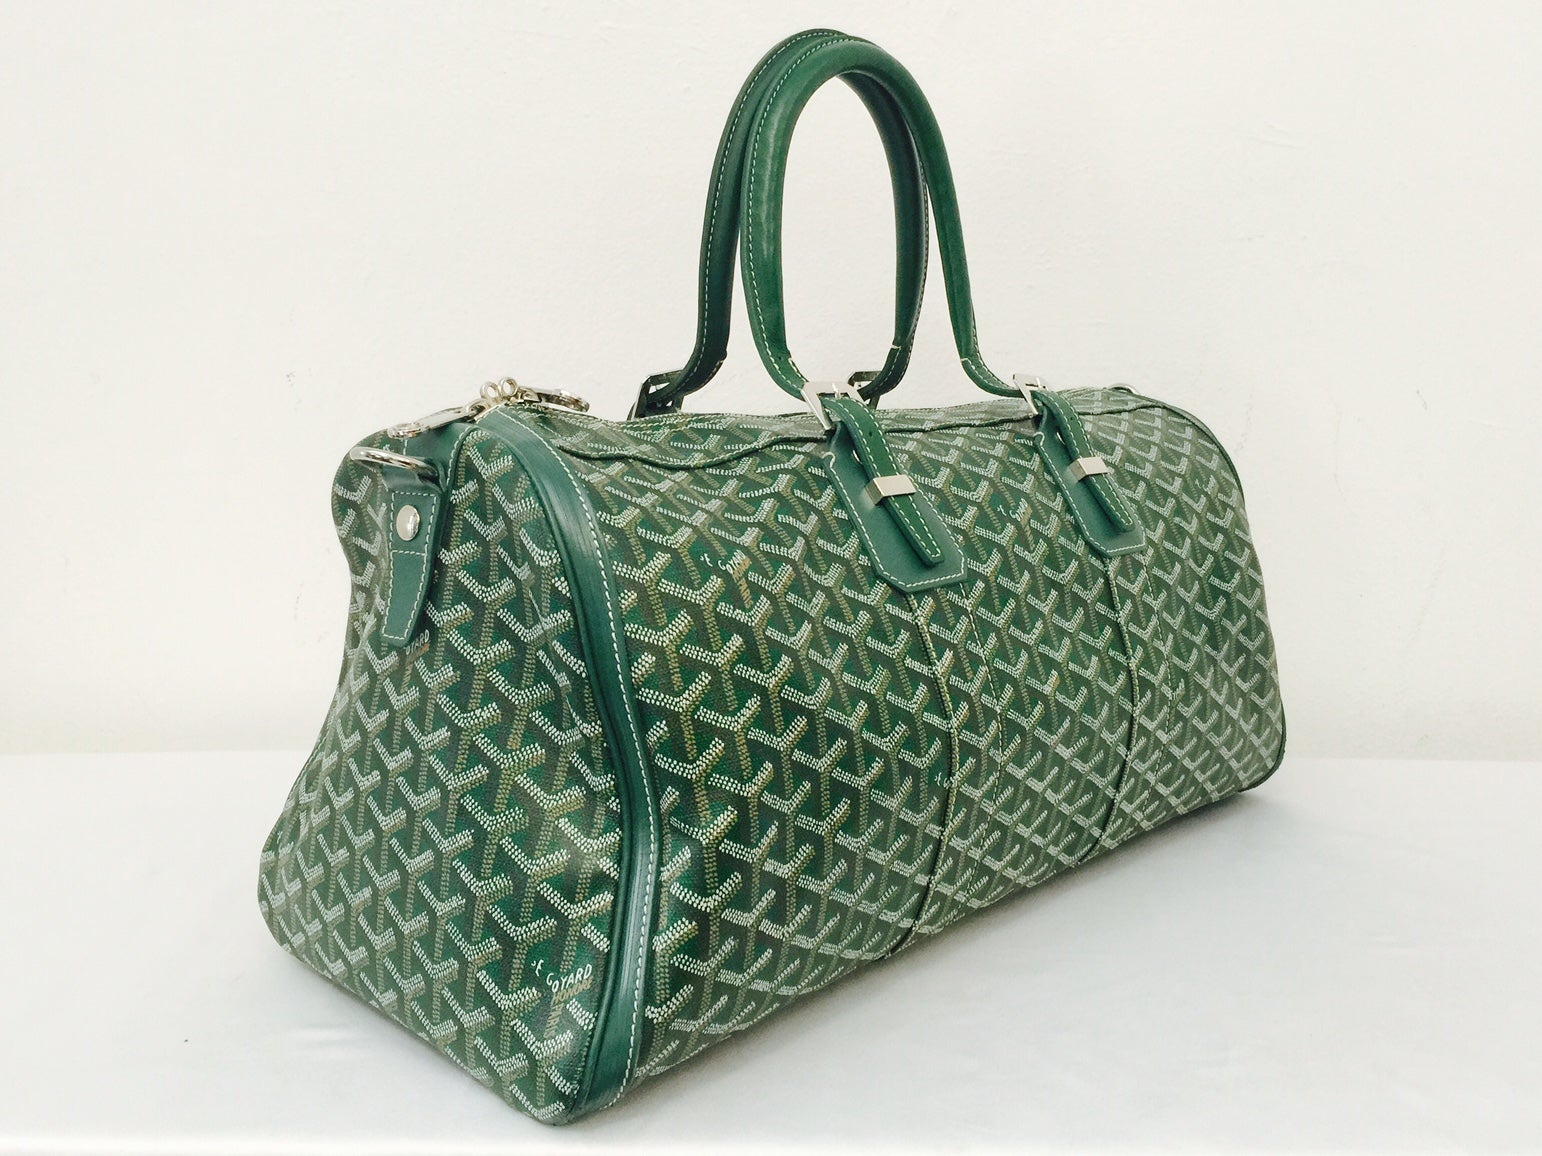 green goyard duffle bag